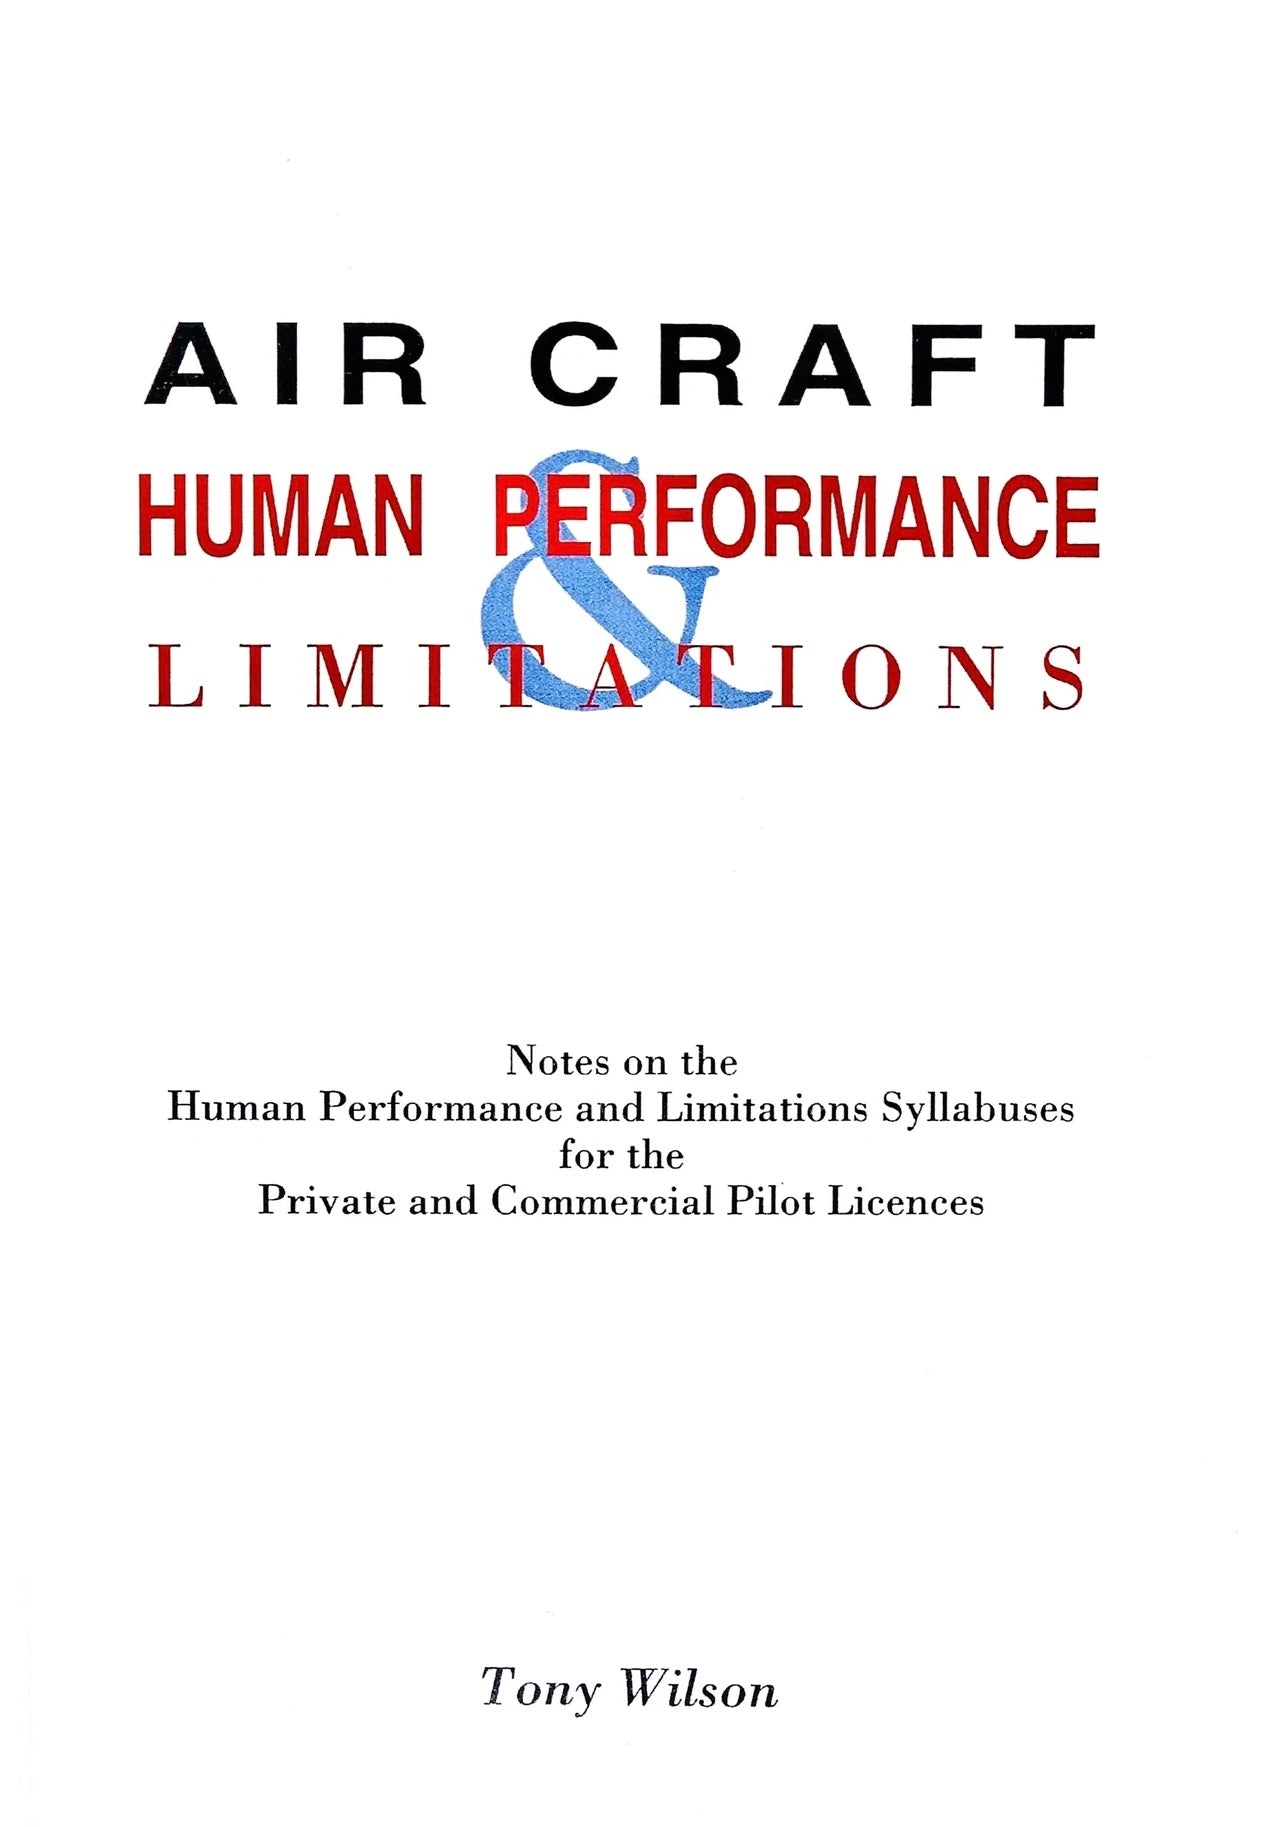 Aircraft Human Performance & Limitations - by Tony Wilson